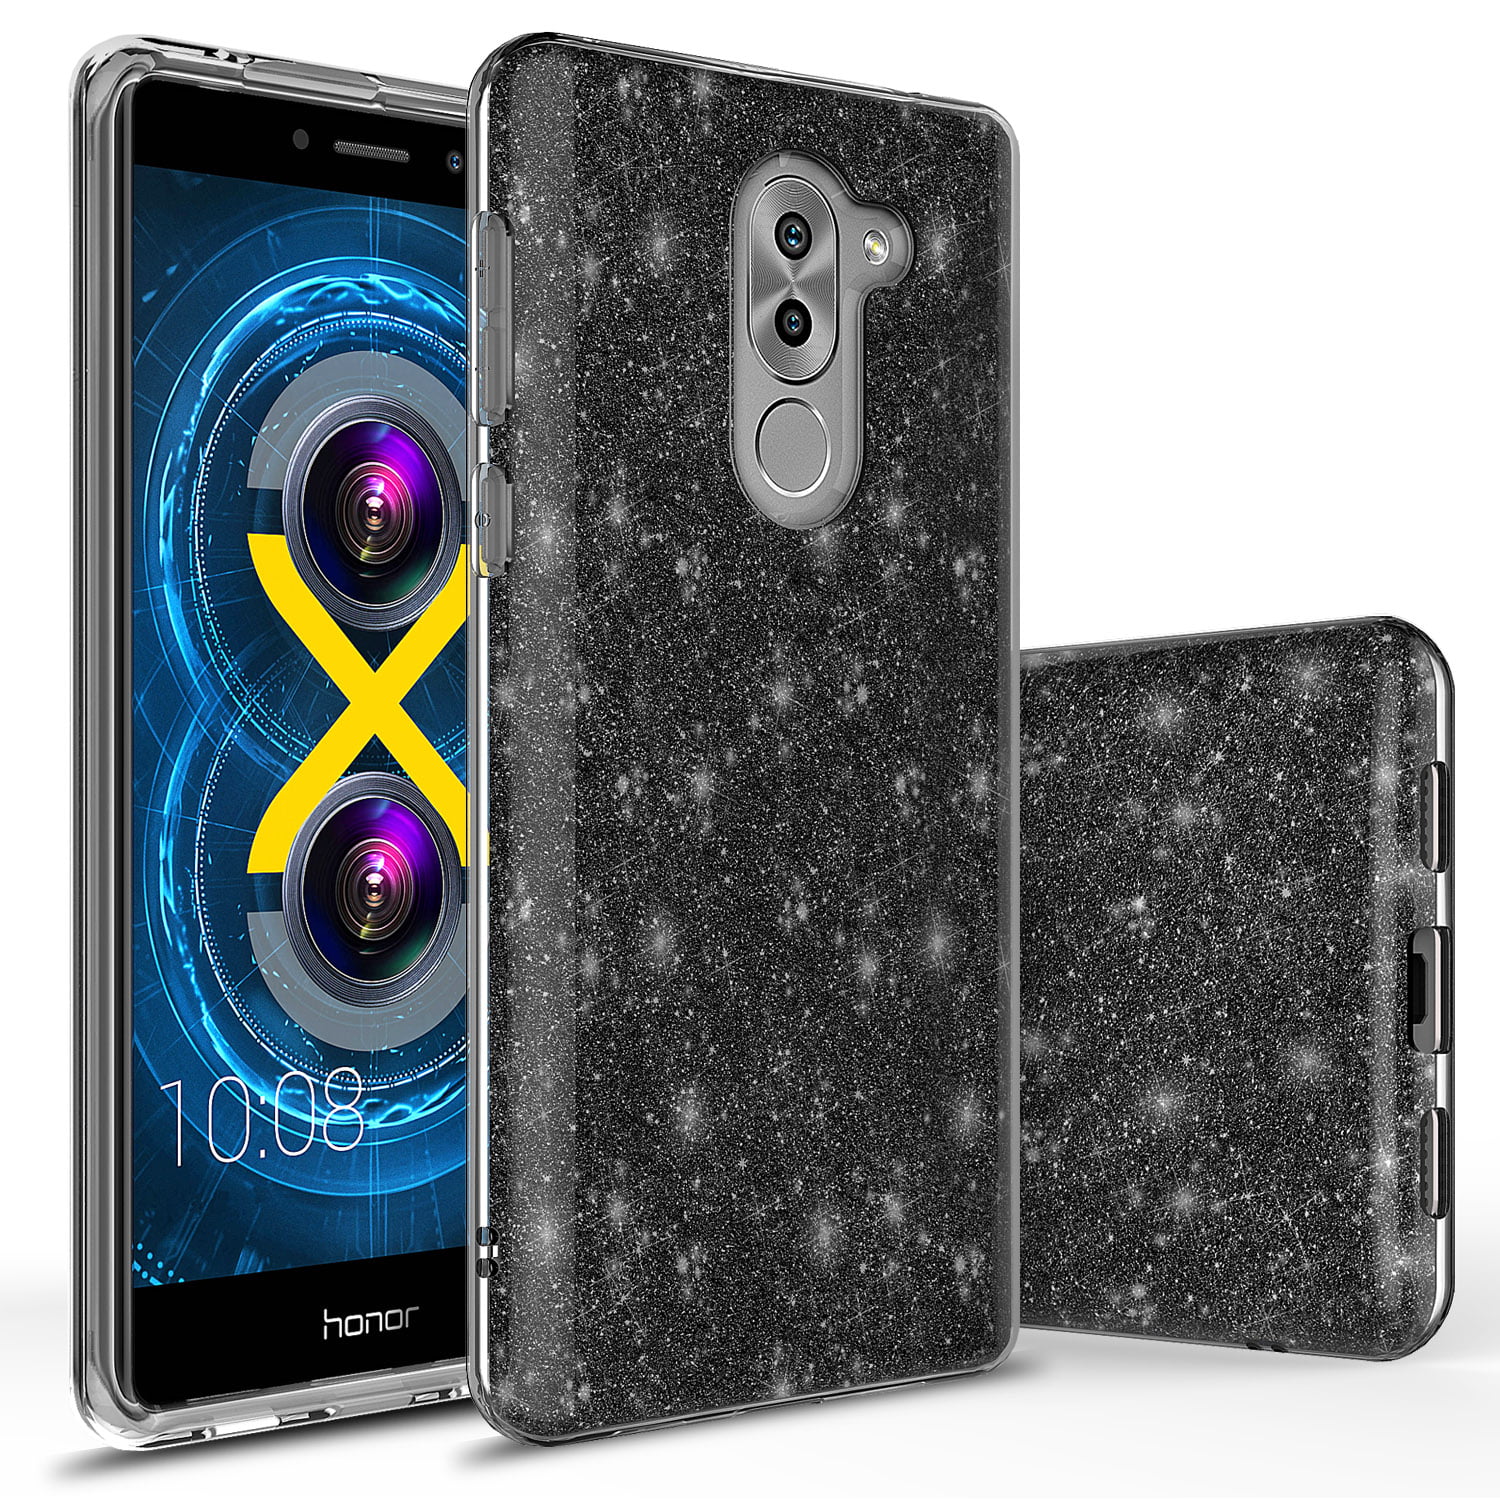 hoofdkussen overstroming offset Huawei Honor 6X Case, Honor 6X Case, Rosebono Luxury Shinning Sparkle Bling  Case Cover for Huawei Honor 6X (Black) - Walmart.com